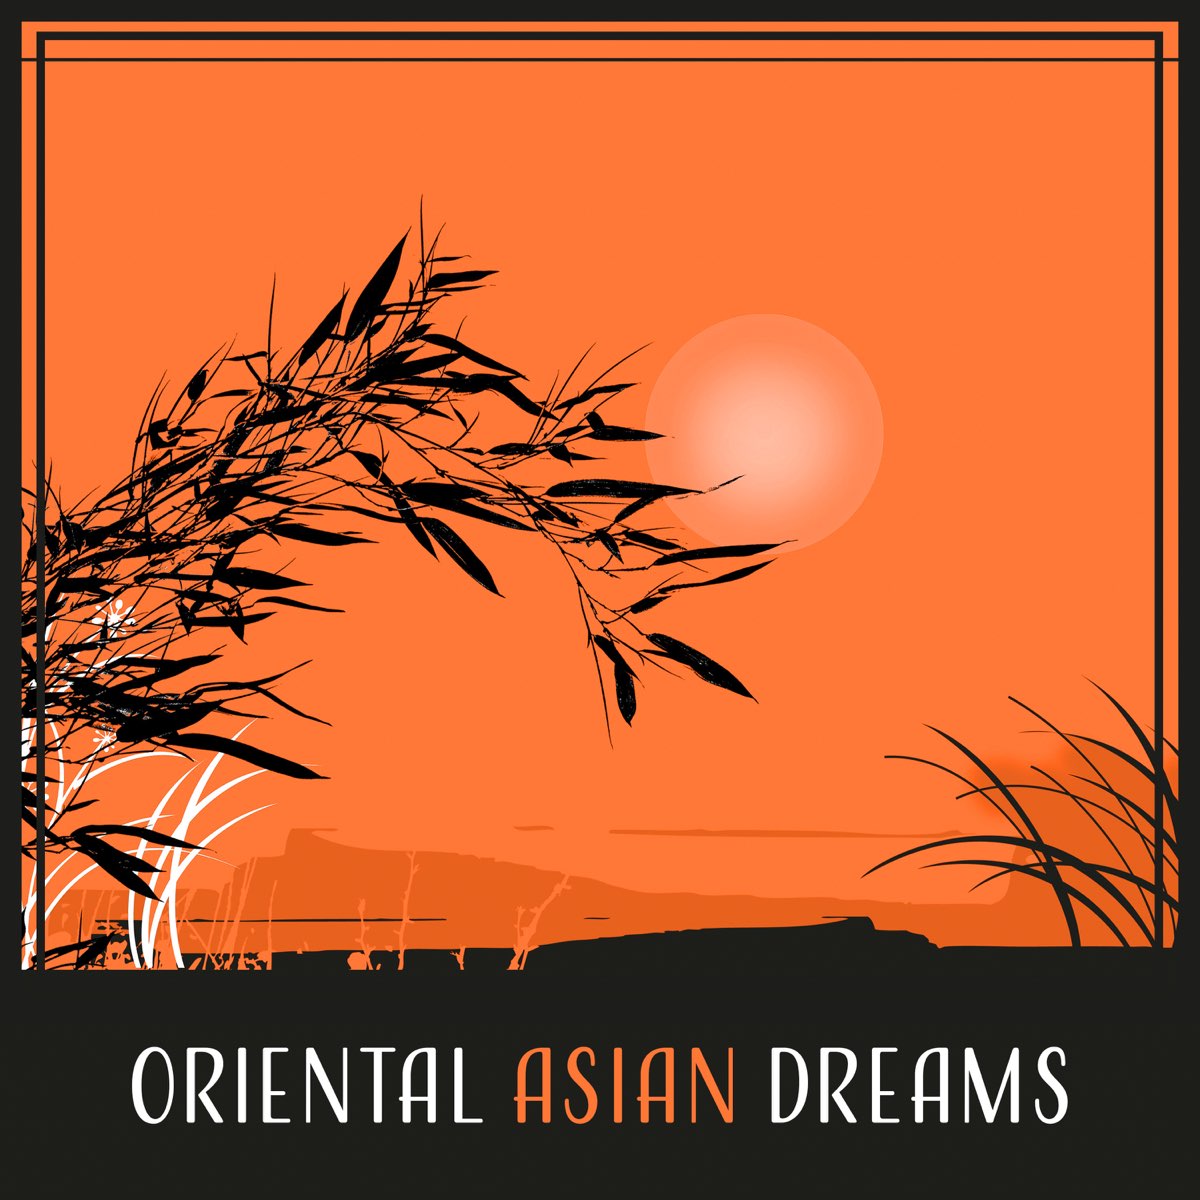 Asia dream. Asian Dream.